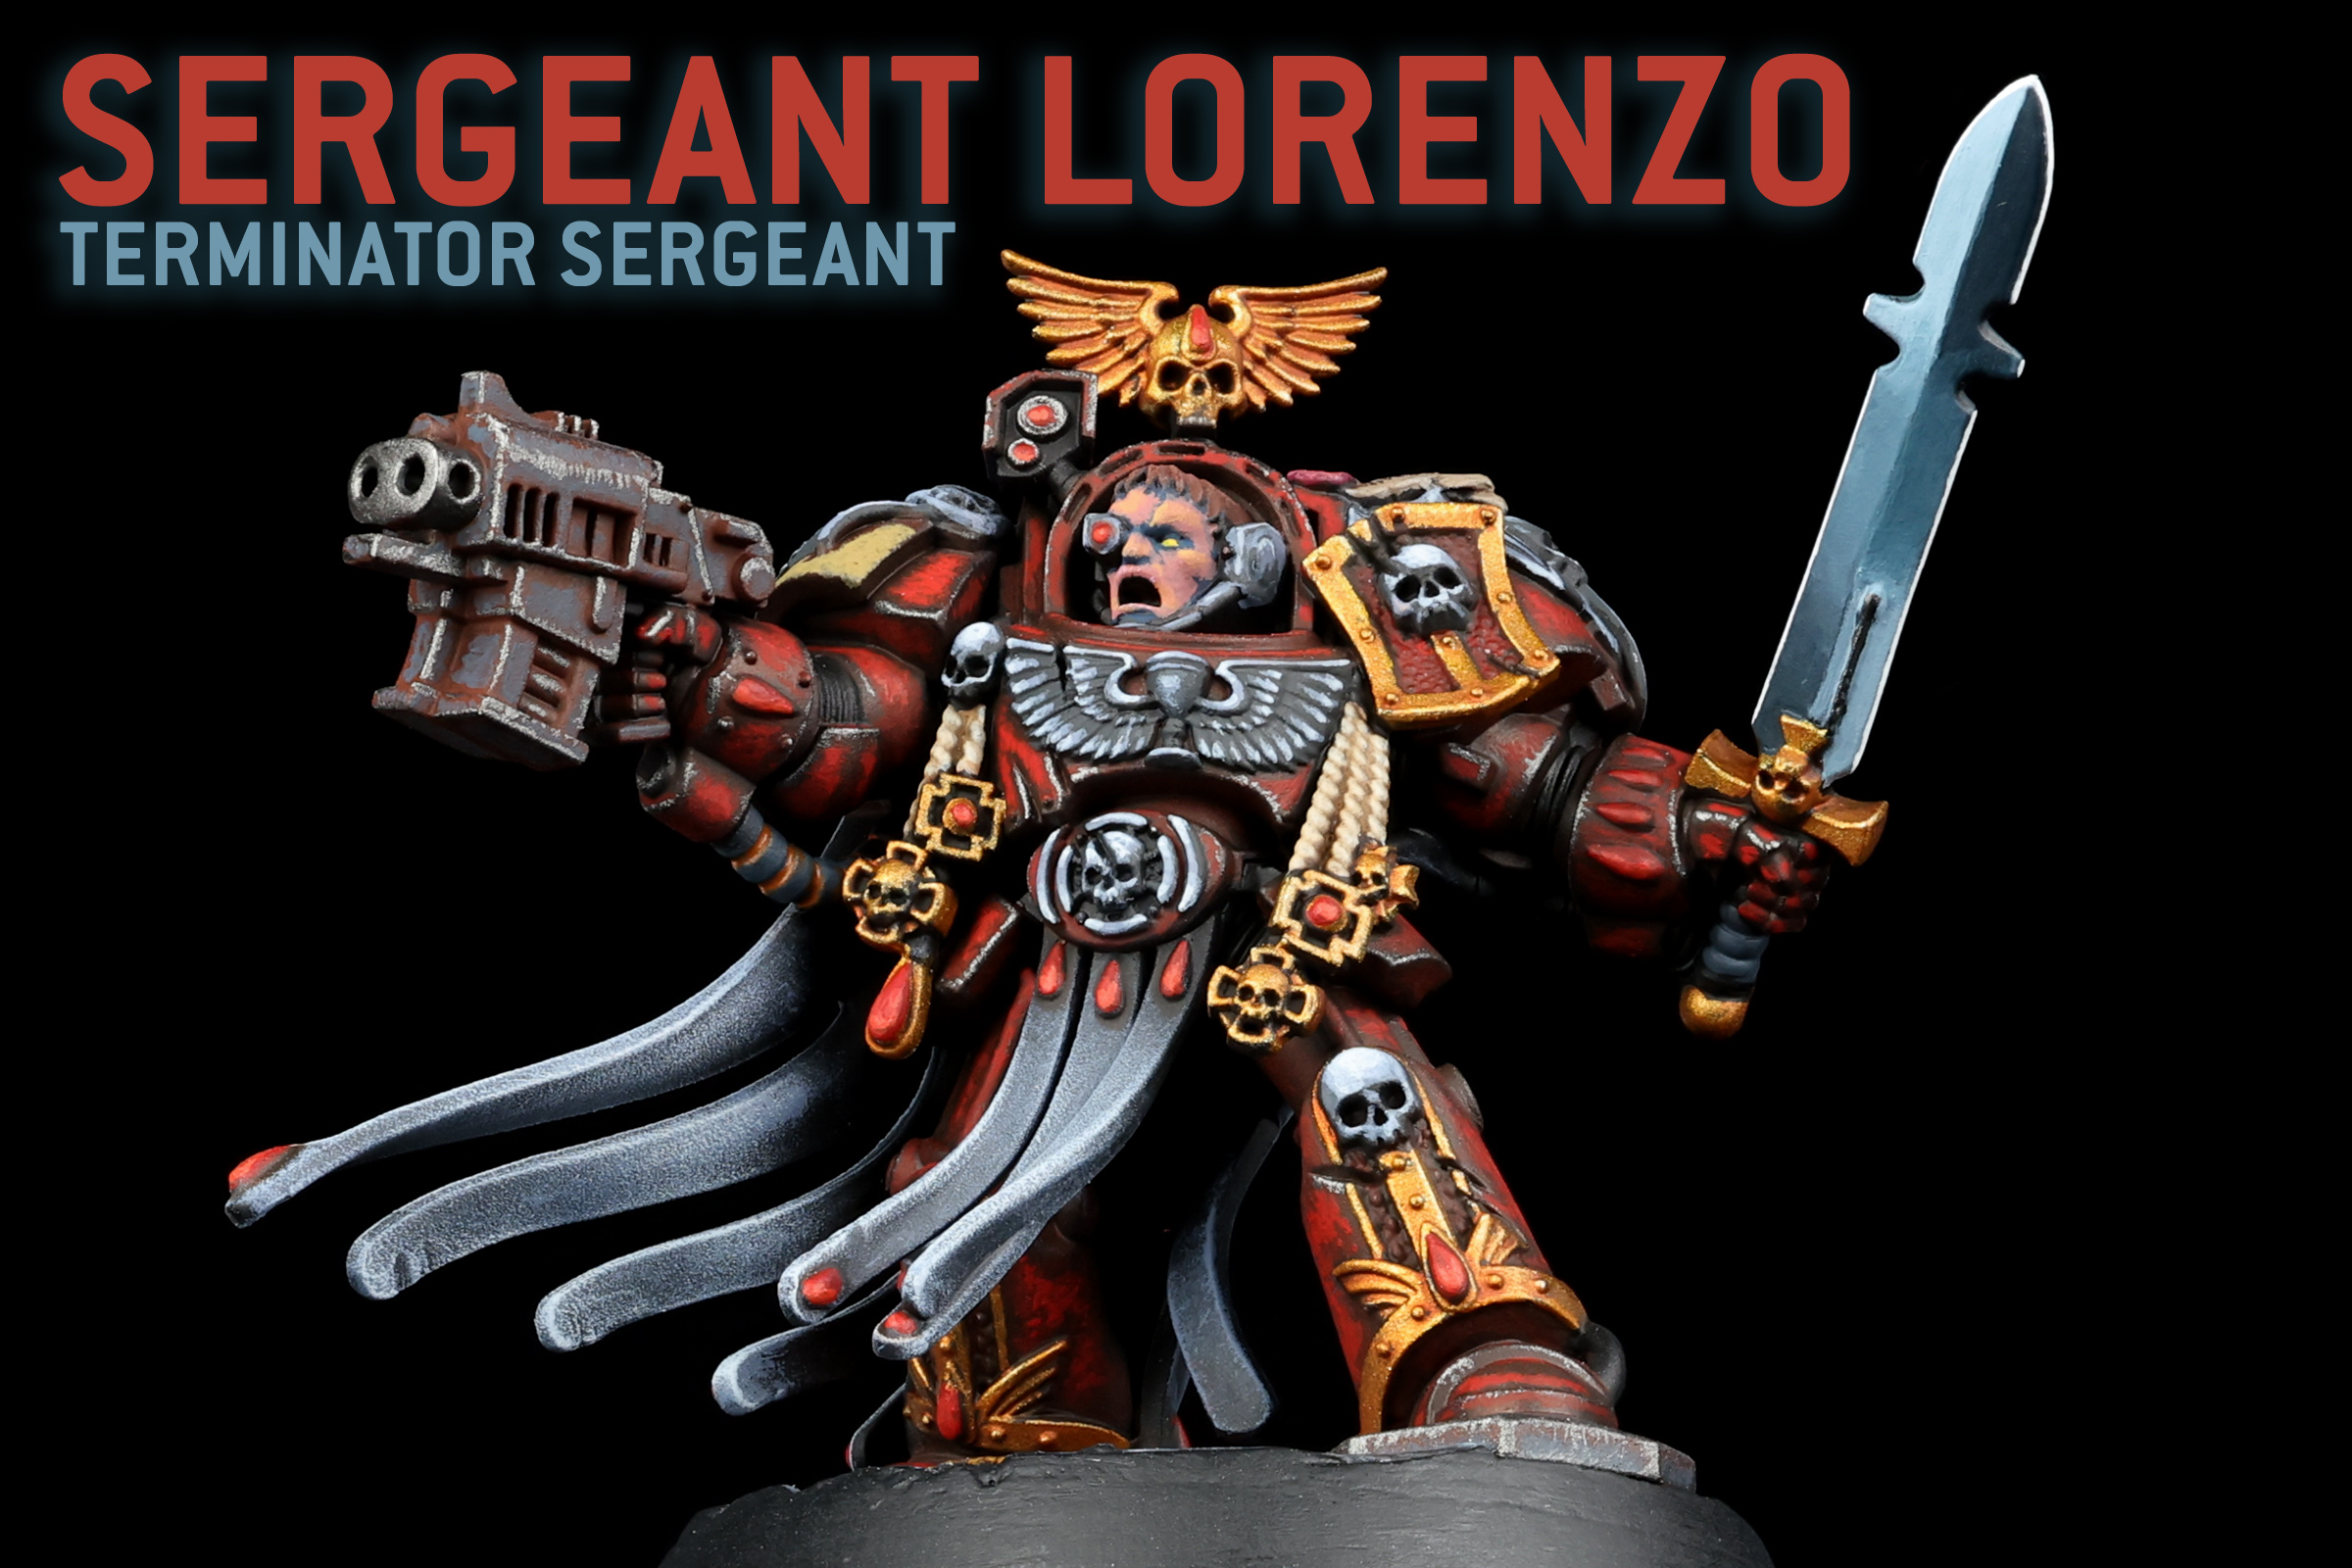 Sergeant Lorenzo, Terminator Sergeant